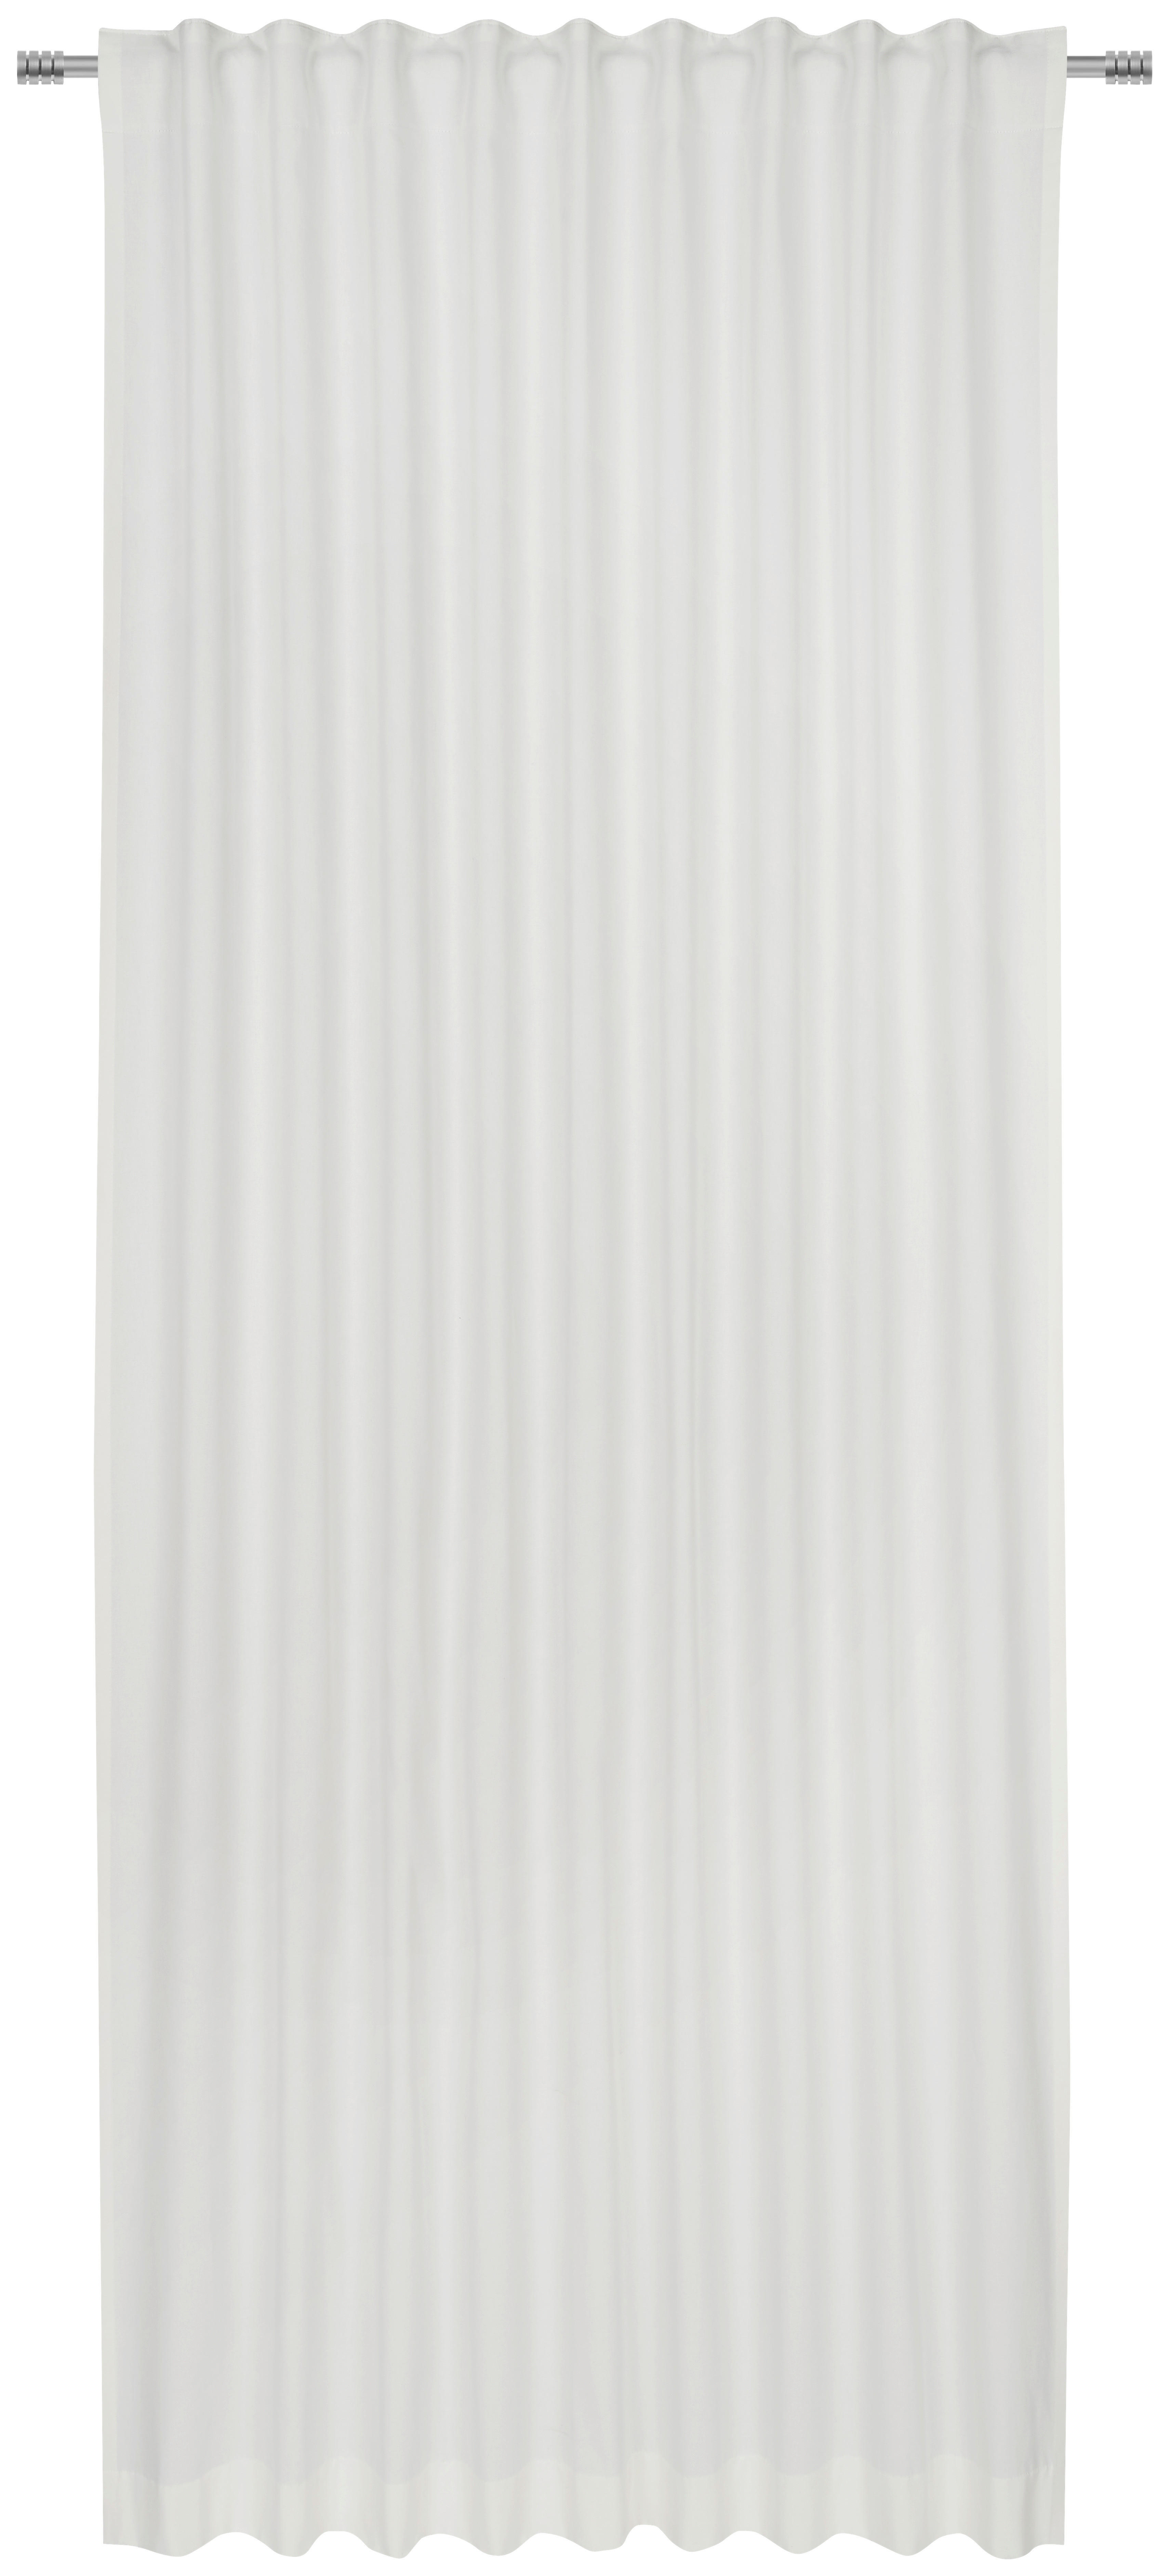 FERTIGVORHANG MERLE blickdicht 140/255 cm   - Weiß, Basics, Textil (140/255cm) - Bio:Vio